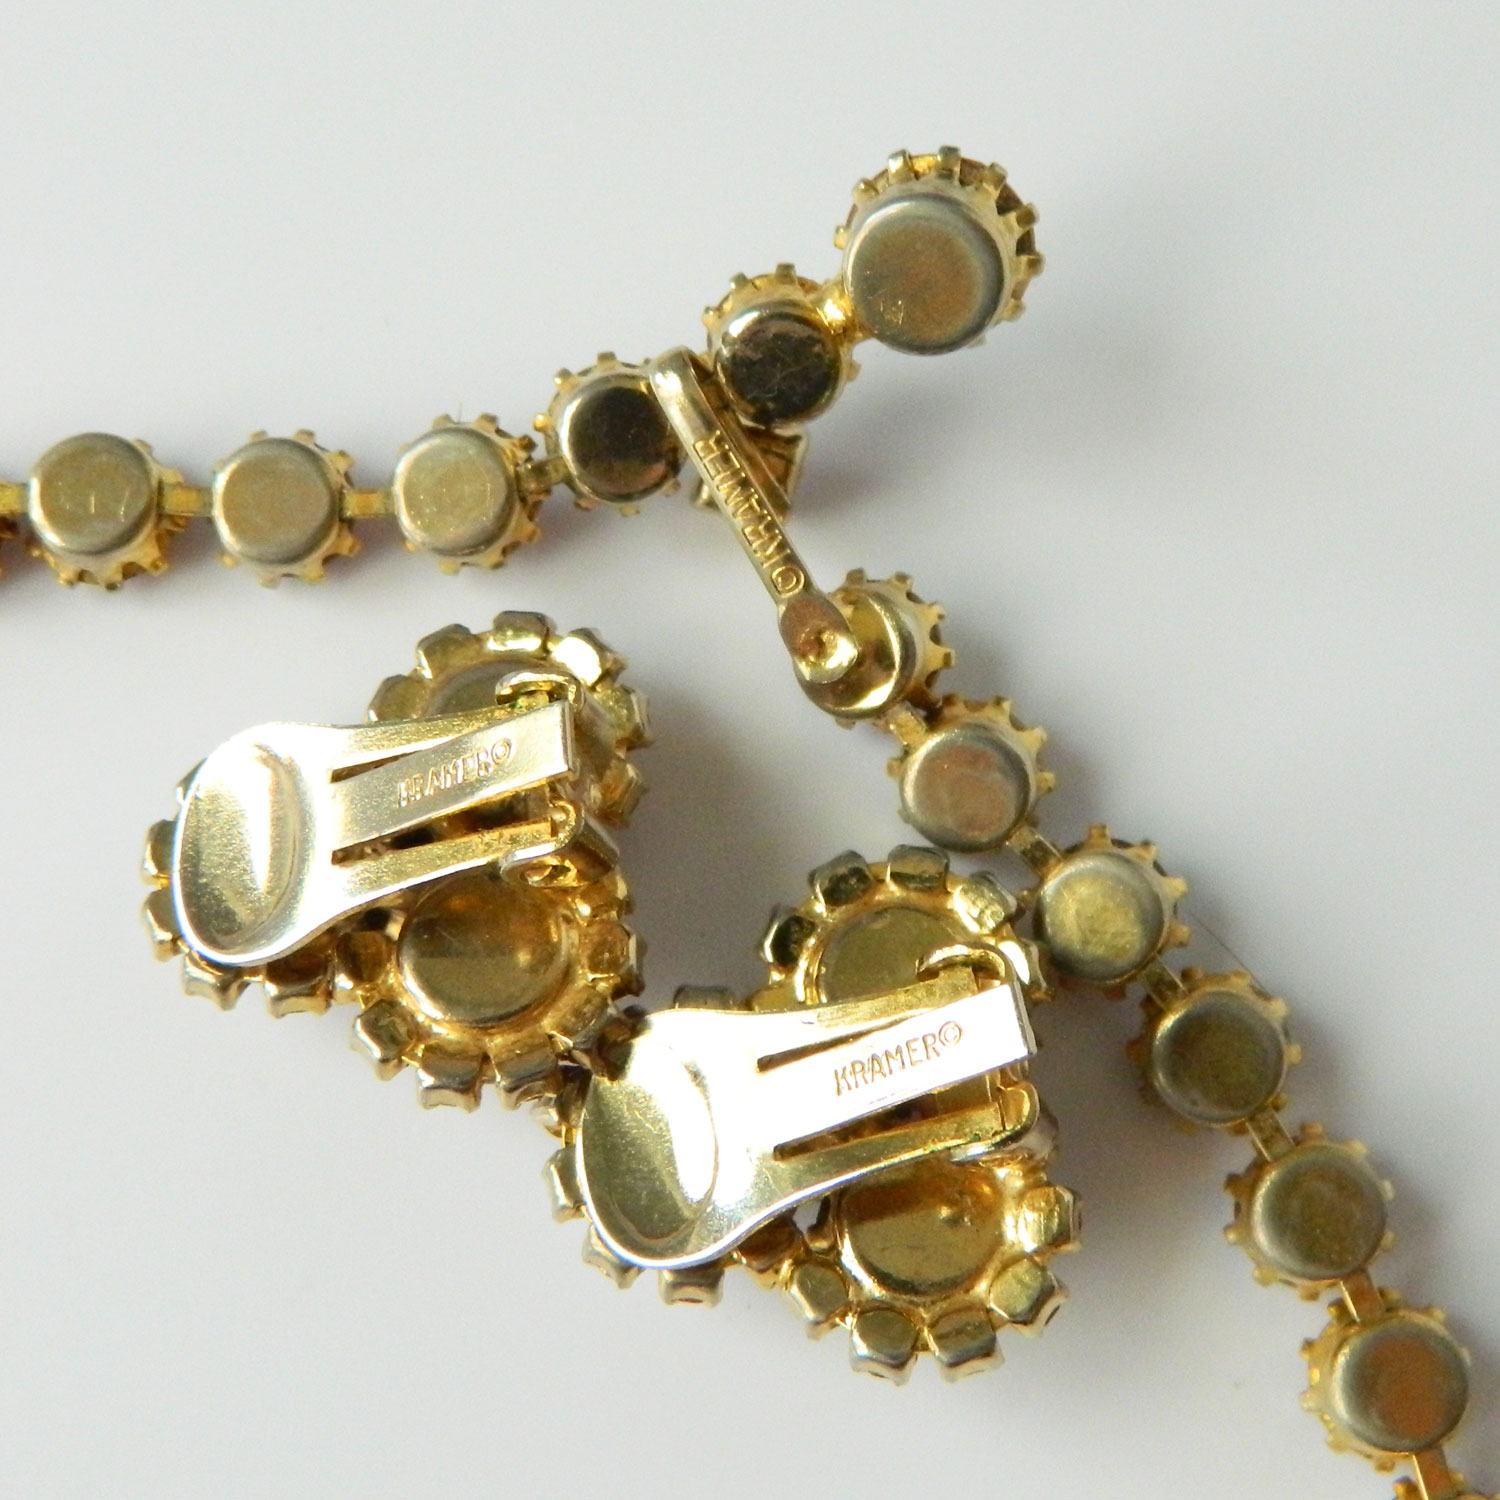 Kramer necklace and earring set